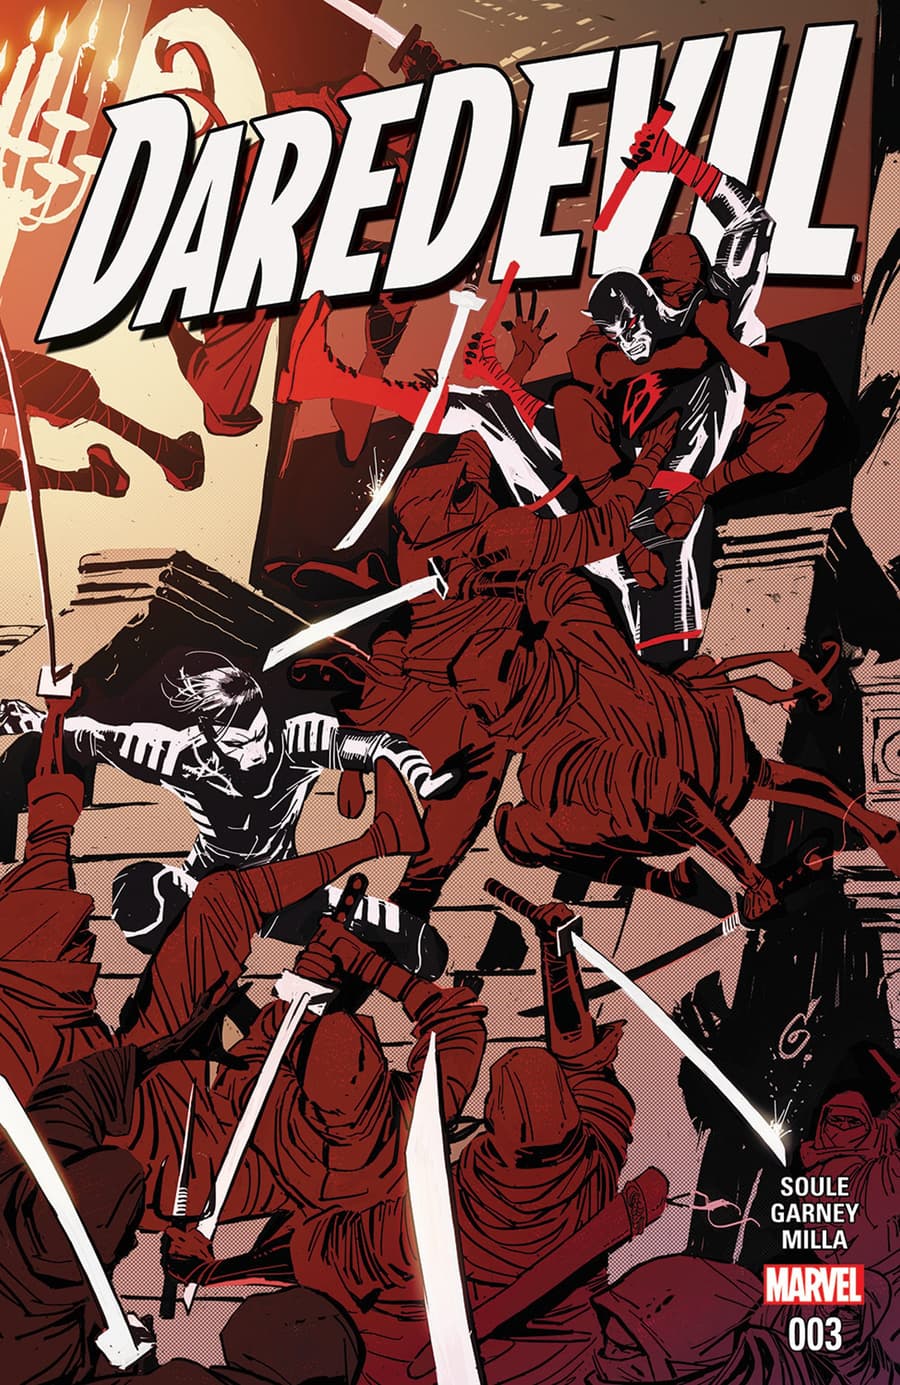 DAREDEVIL (2015) #3 cover by Ron Garney